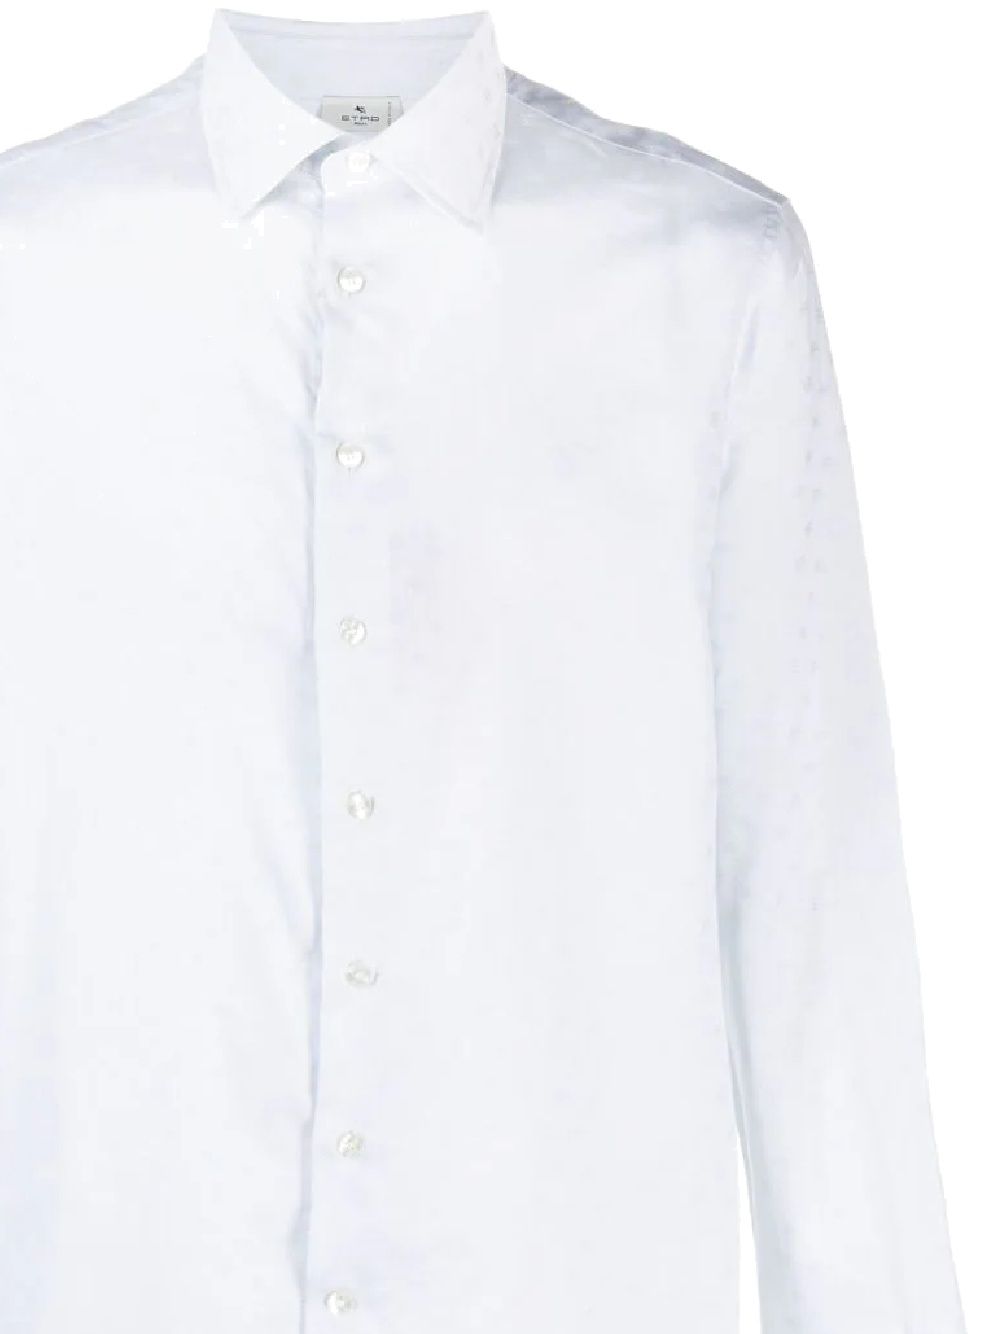 Patterned jacquard cotton shirt